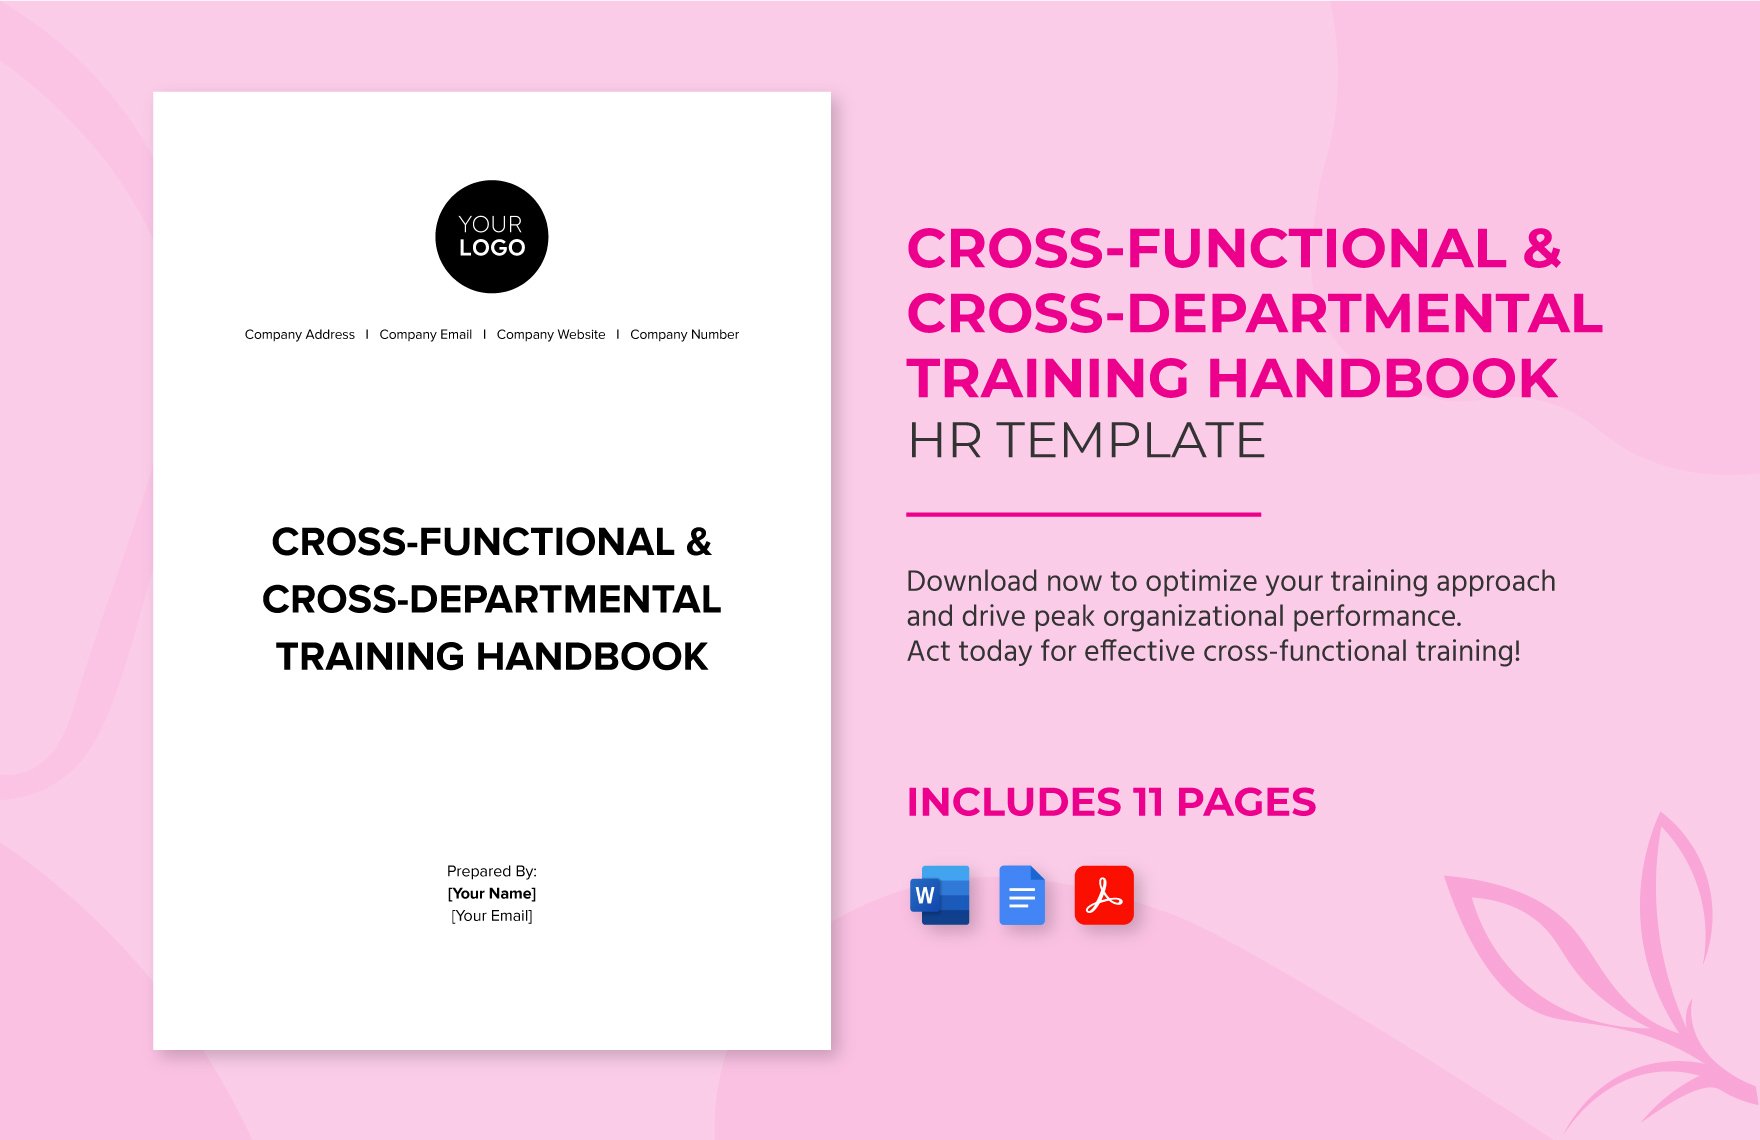 Cross-functional & Cross-departmental Training Handbook HR Template